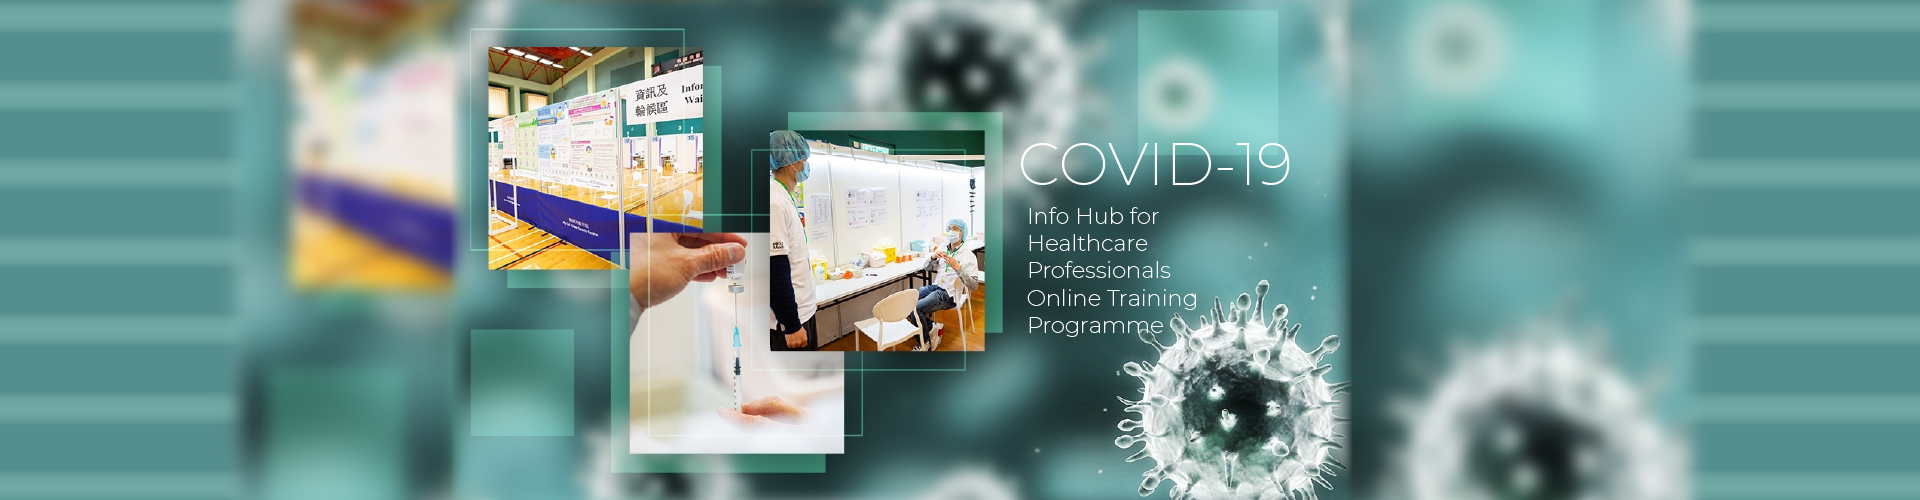 COVID-19 Info Hub for Healthcare Professionals